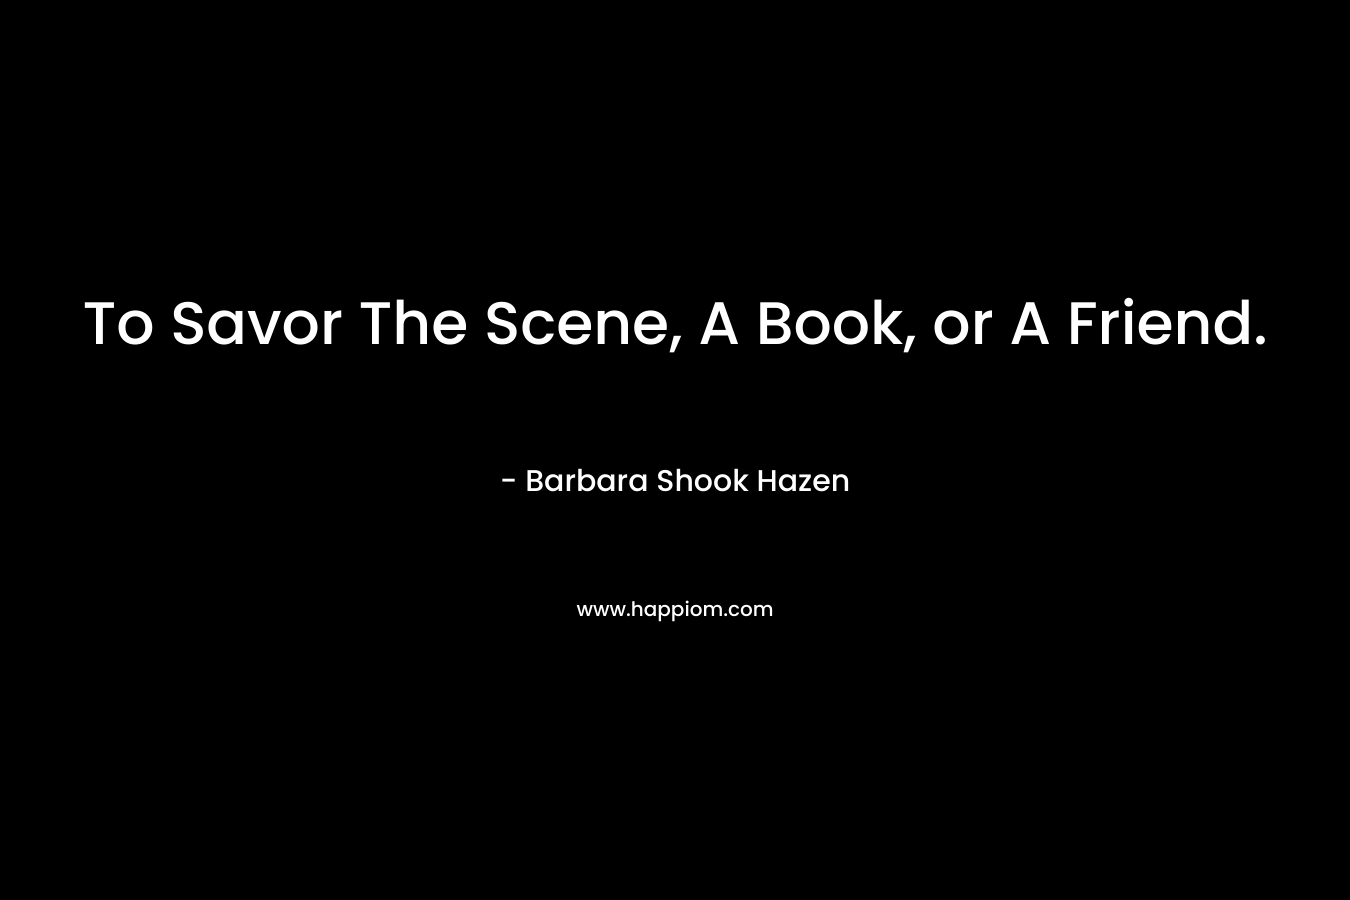 To Savor The Scene, A Book, or A Friend. – Barbara Shook Hazen